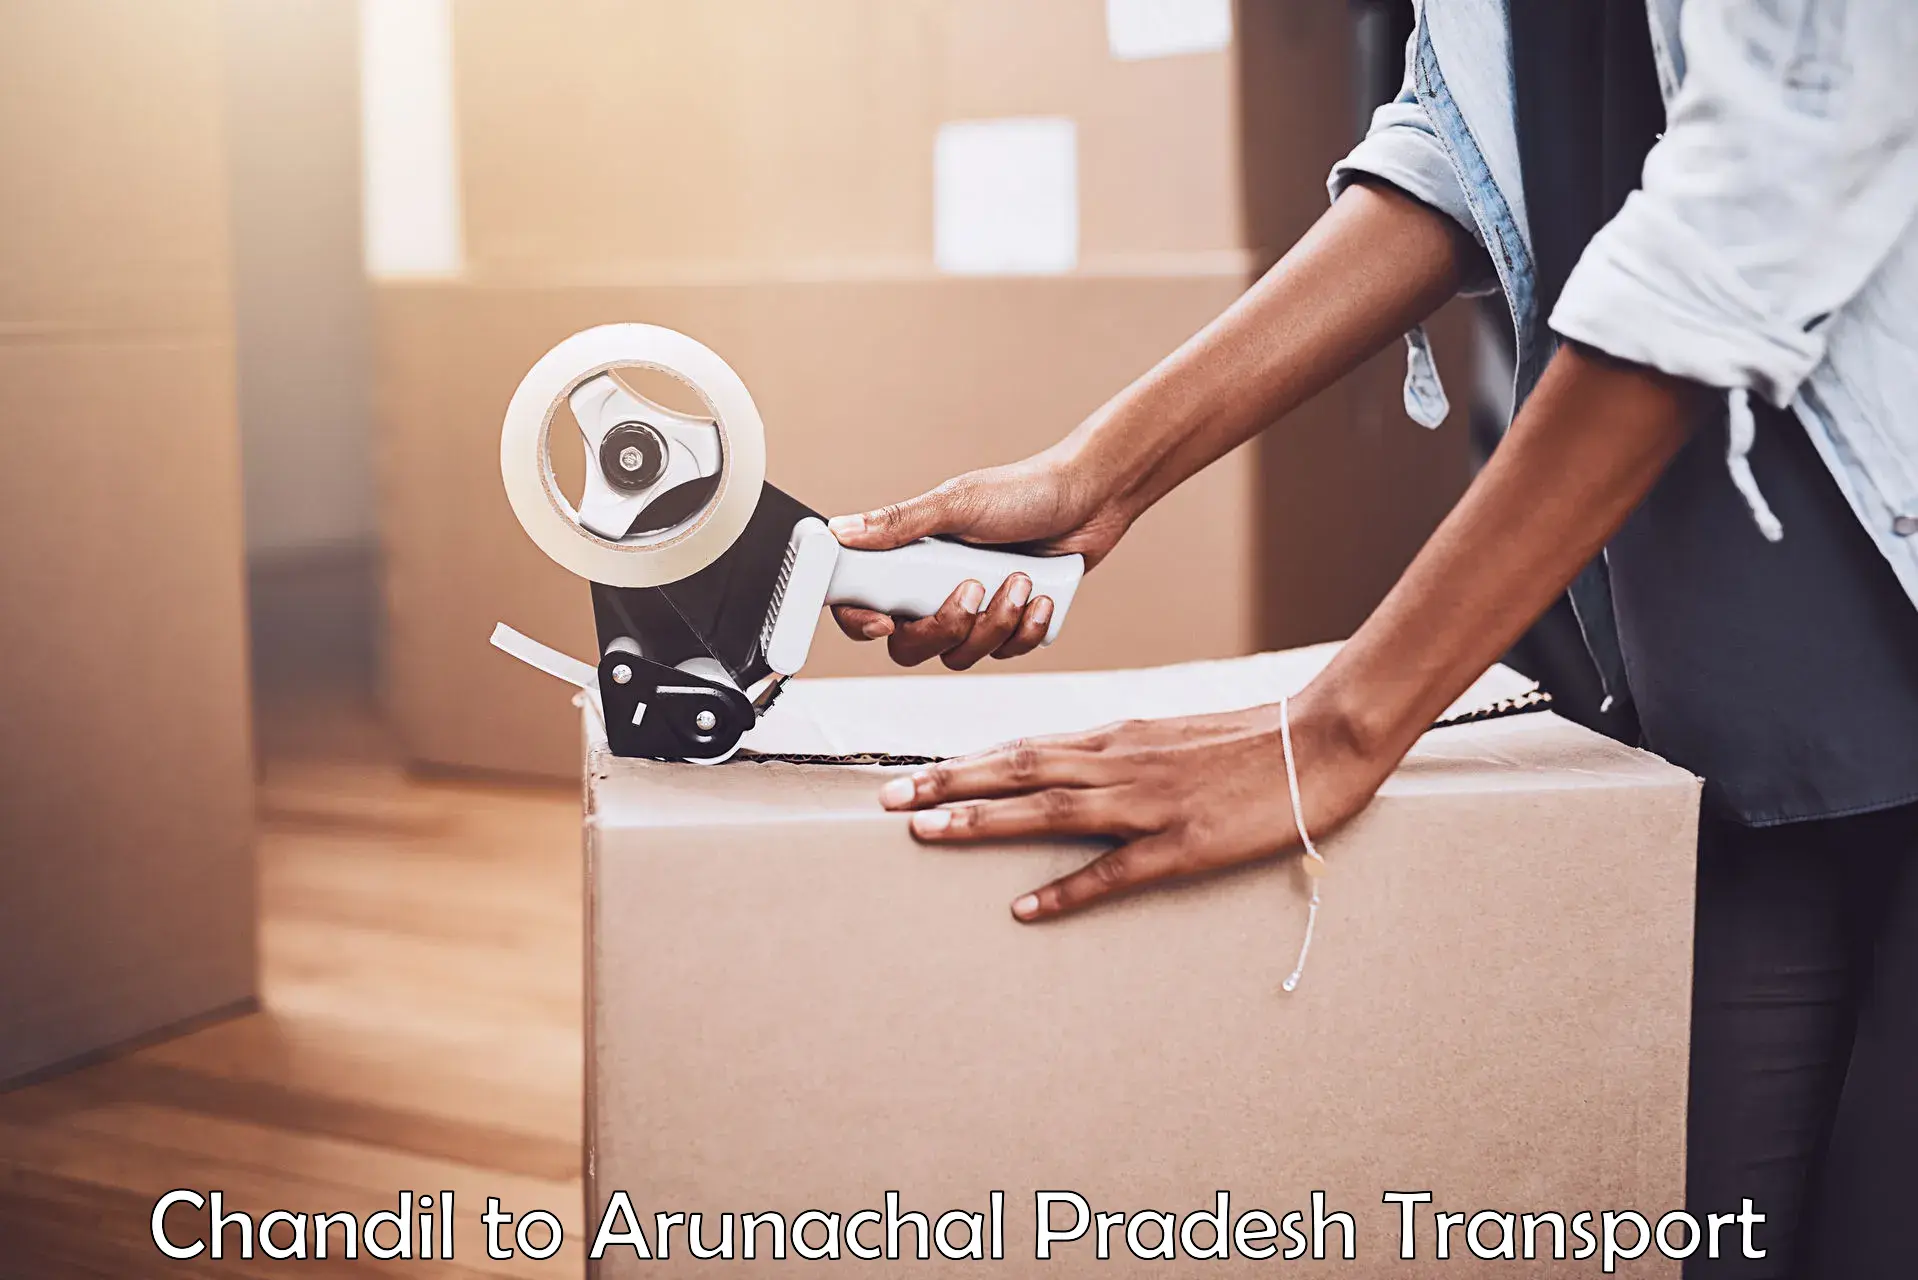 Part load transport service in India Chandil to Arunachal Pradesh